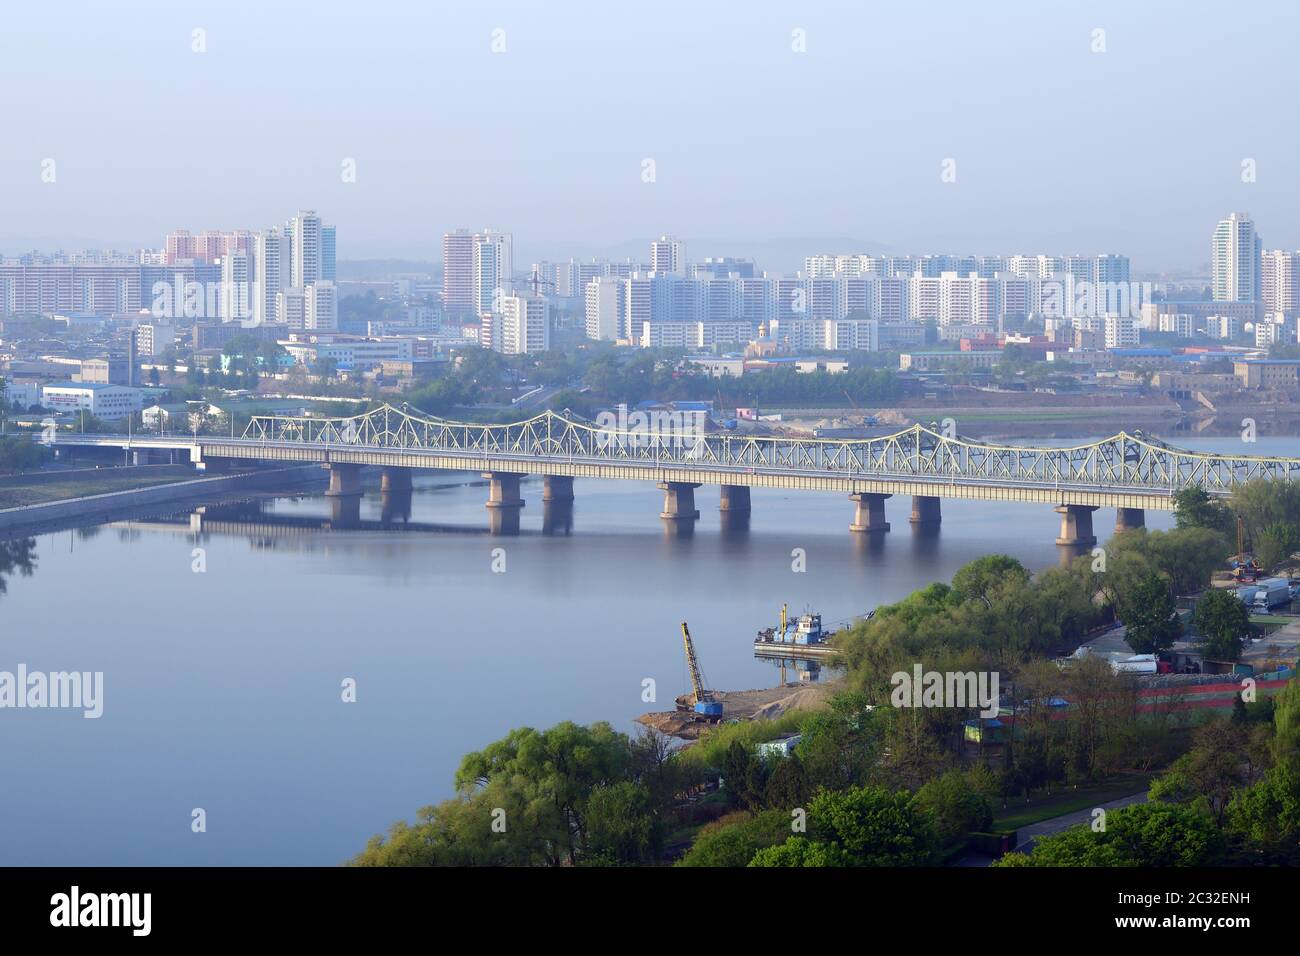 Pyongyang, DPR Korea, North Korea. Bridge across  the Taedong River from the Yanggakdo island and skyline shown at dawn Stock Photo